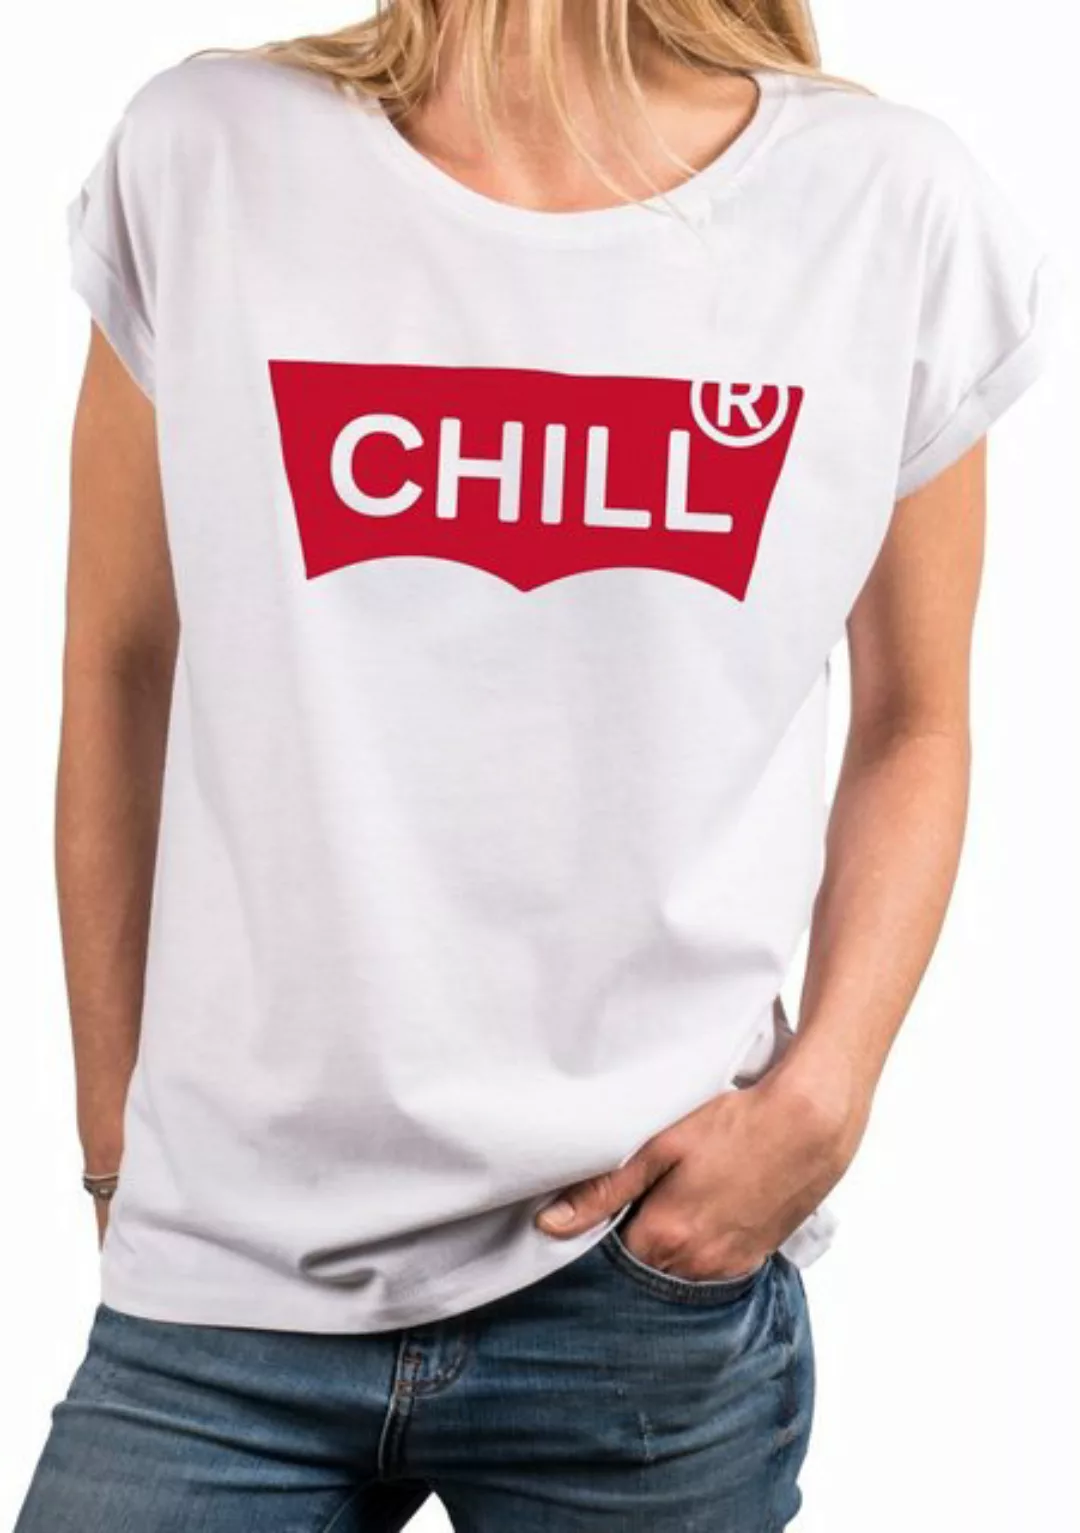 MAKAYA Print-Shirt Damen Kurzarm Sommer Top Aufdruck Chill Motiv Modern Ove günstig online kaufen